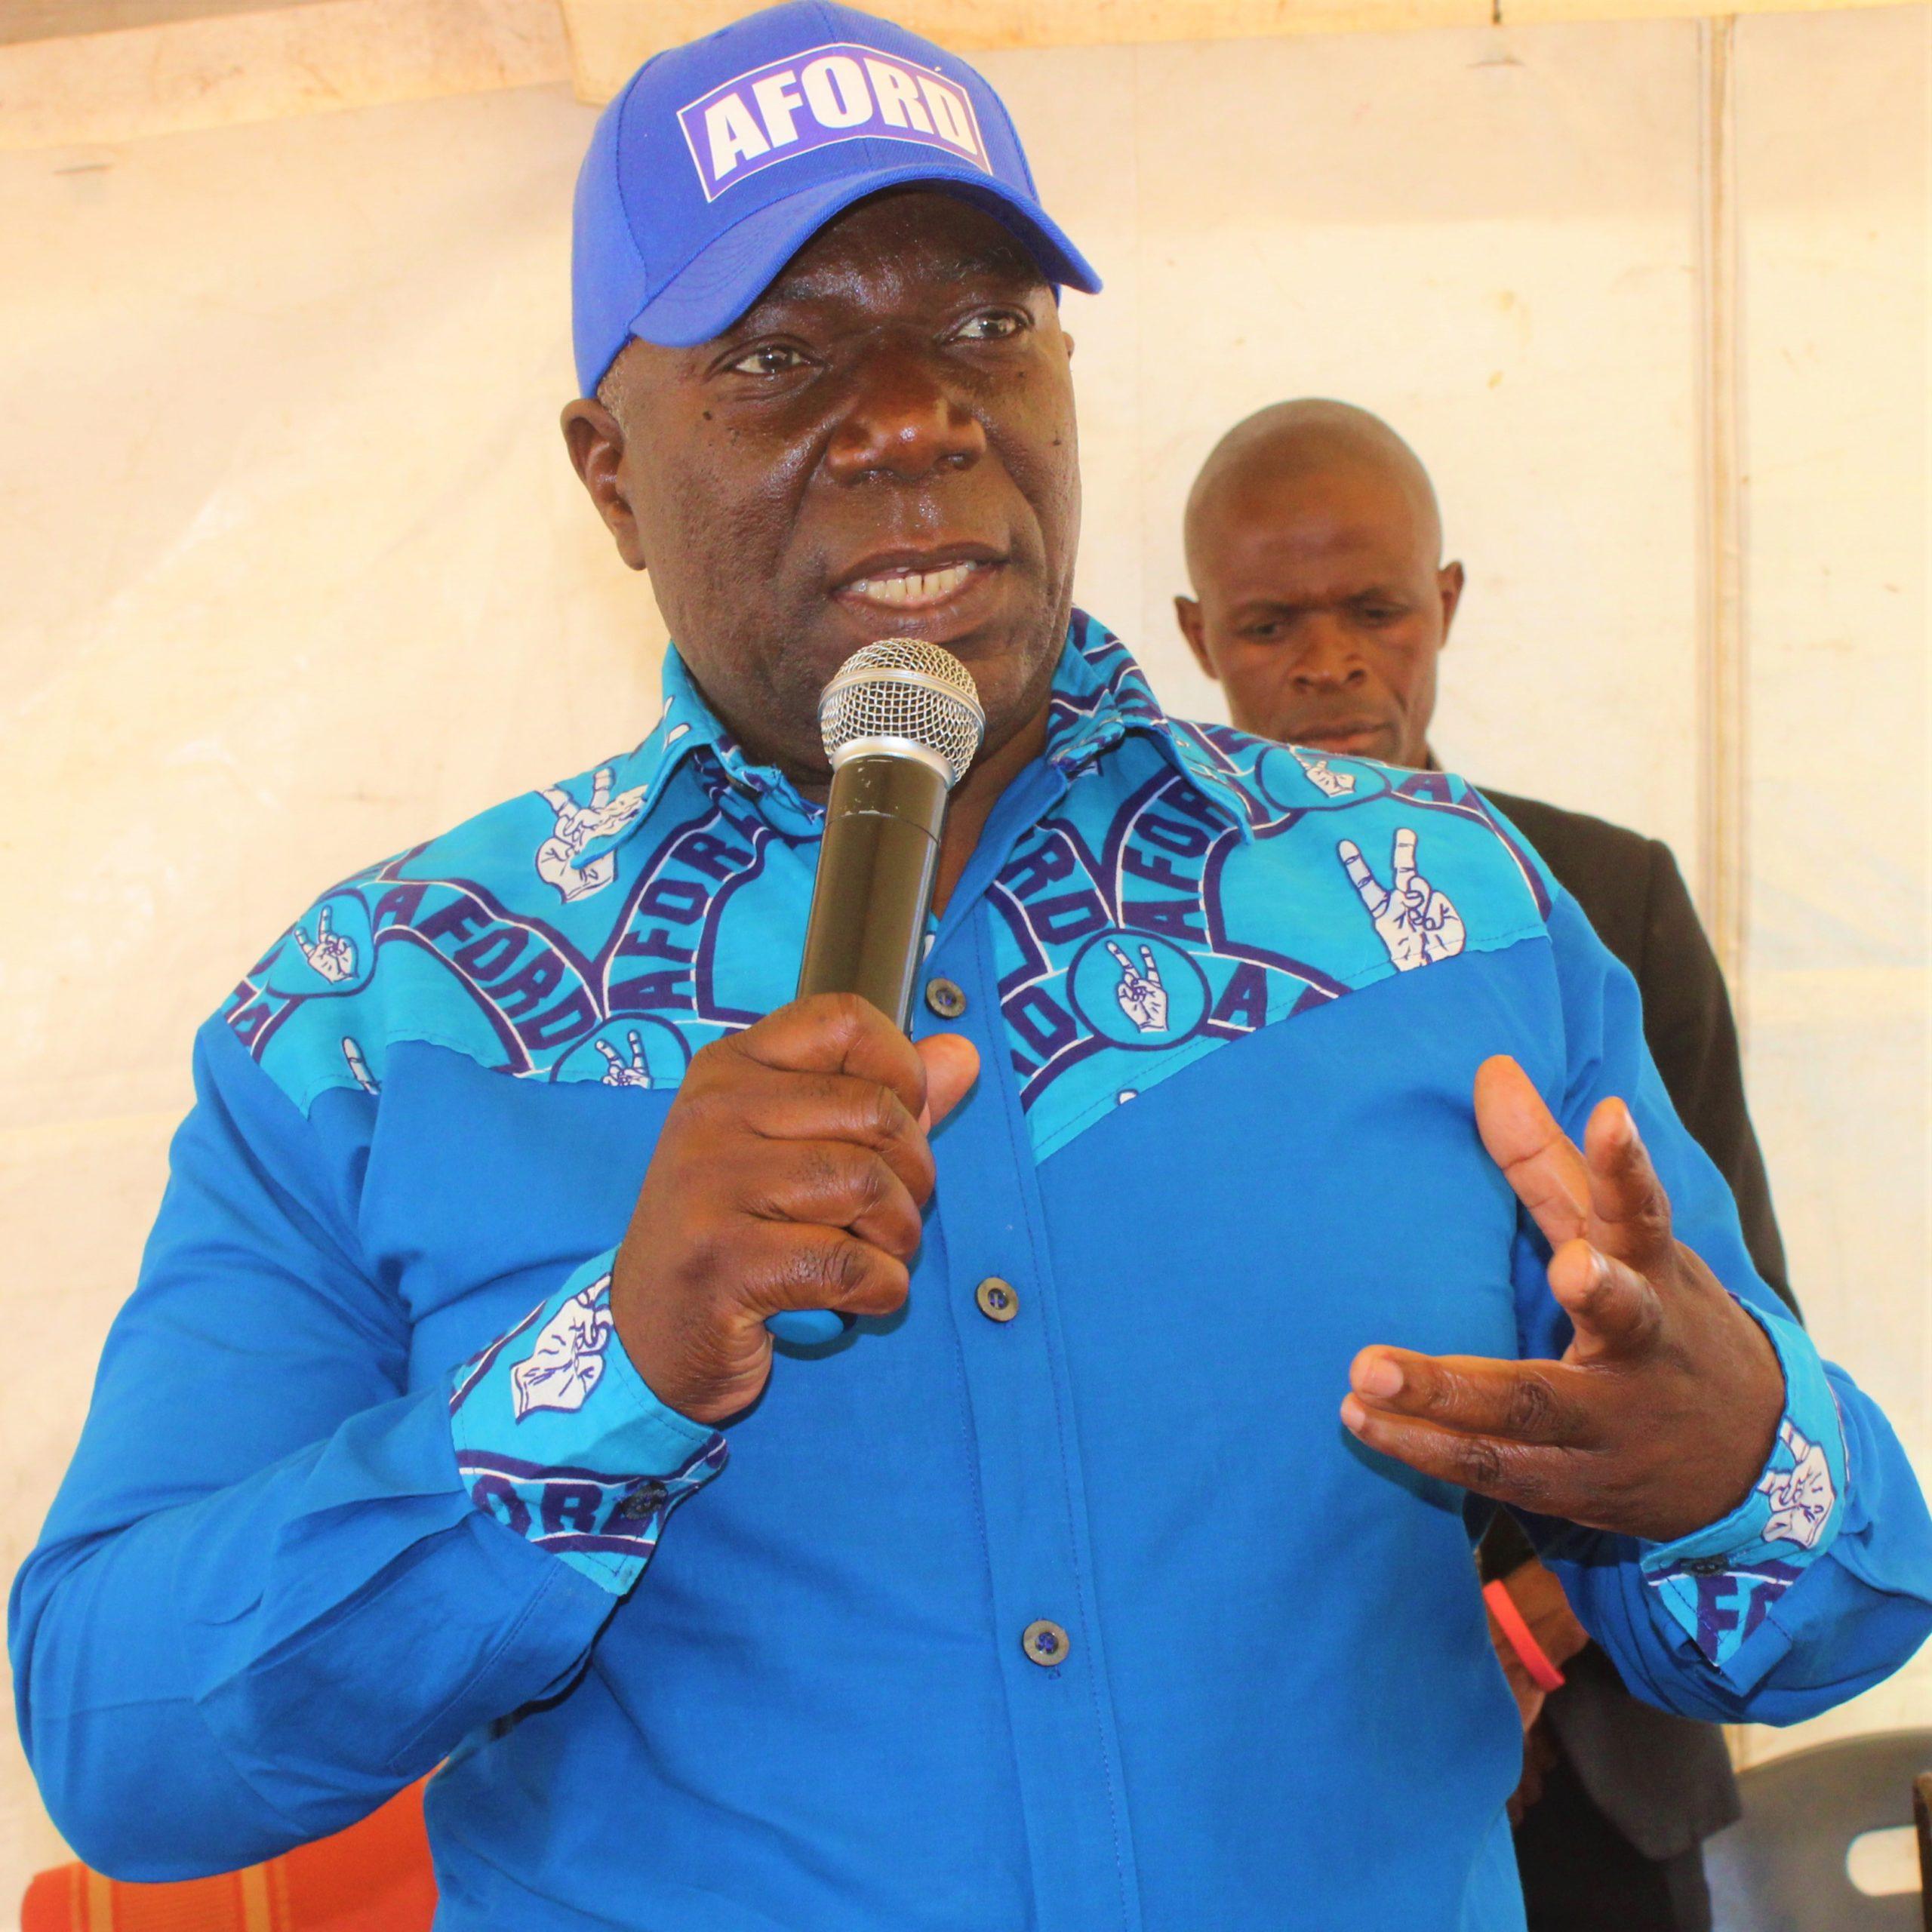 AFORD’s Chihana says NO to having political parties align their manifesto Malawi 2026 Agenda